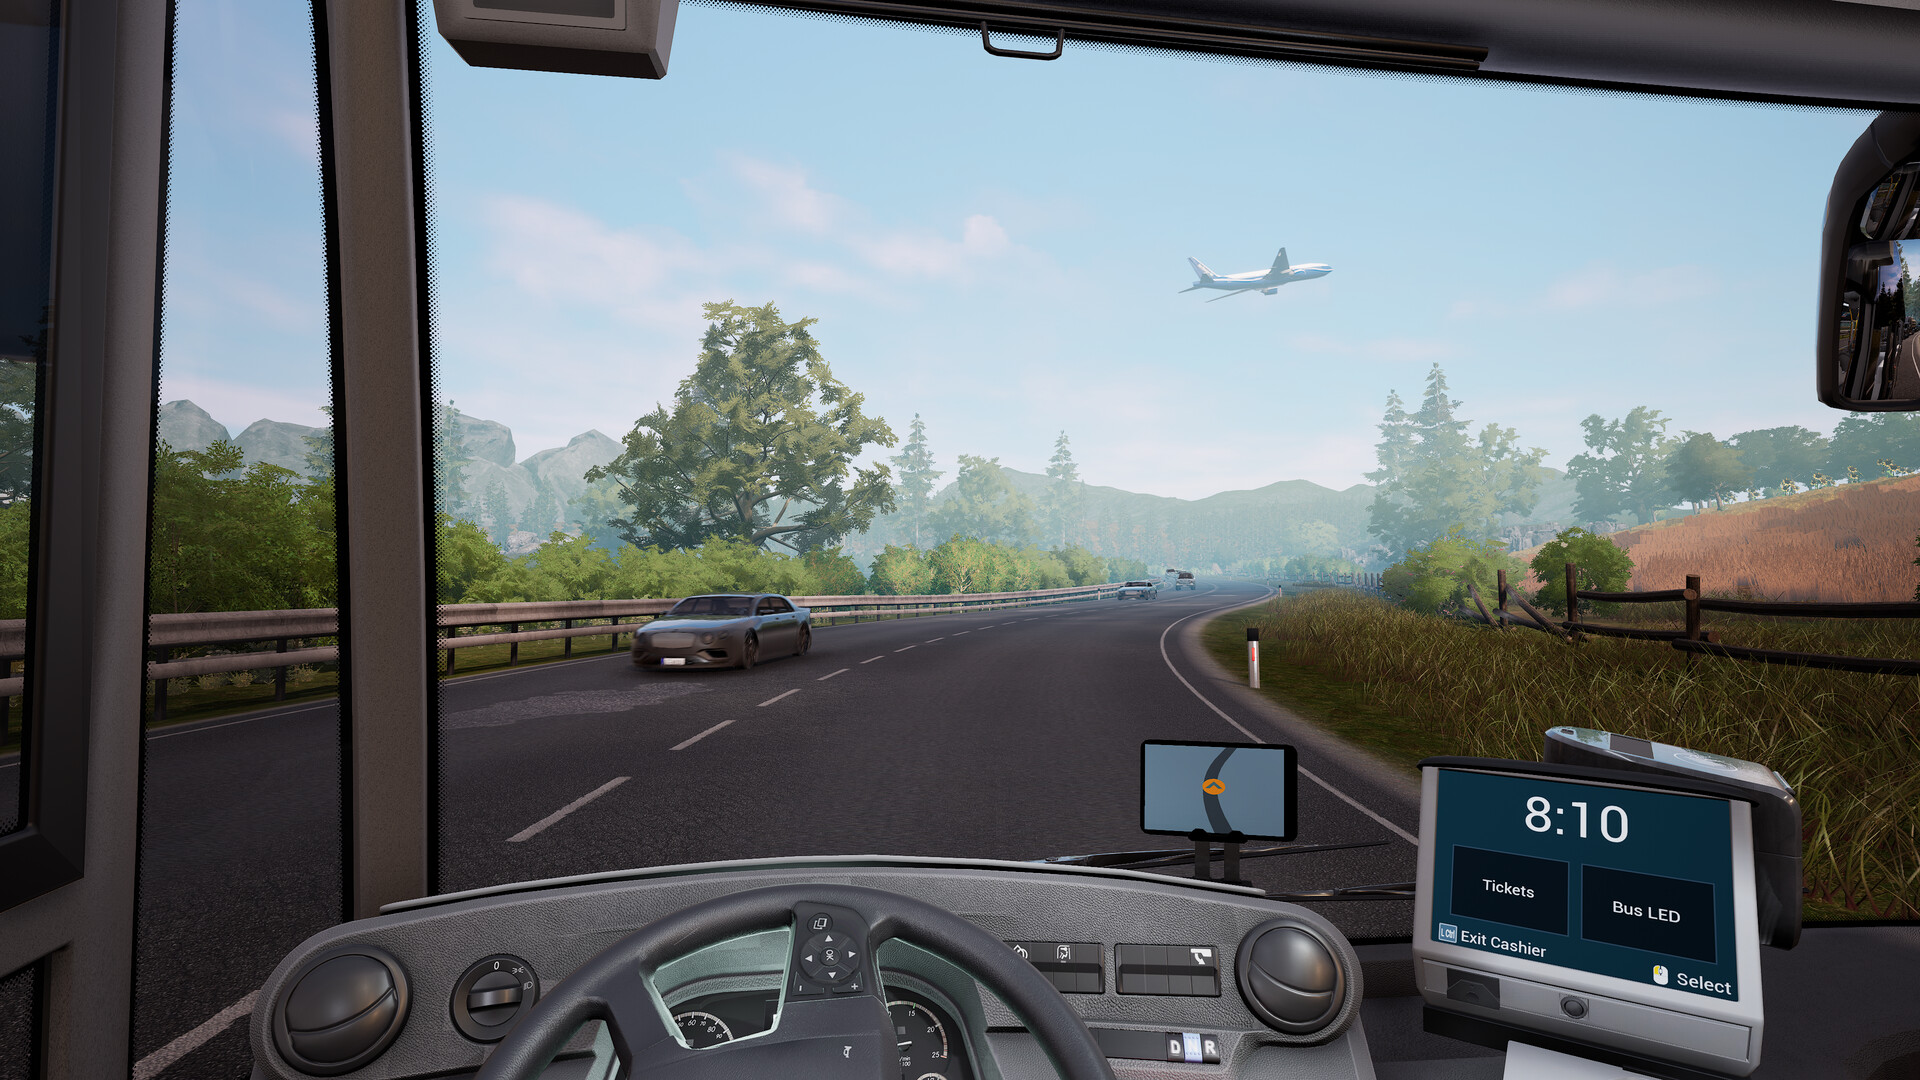 Bus Simulator 21 Next Stop – Gold Upgrade EU DLC PS5 CD Key